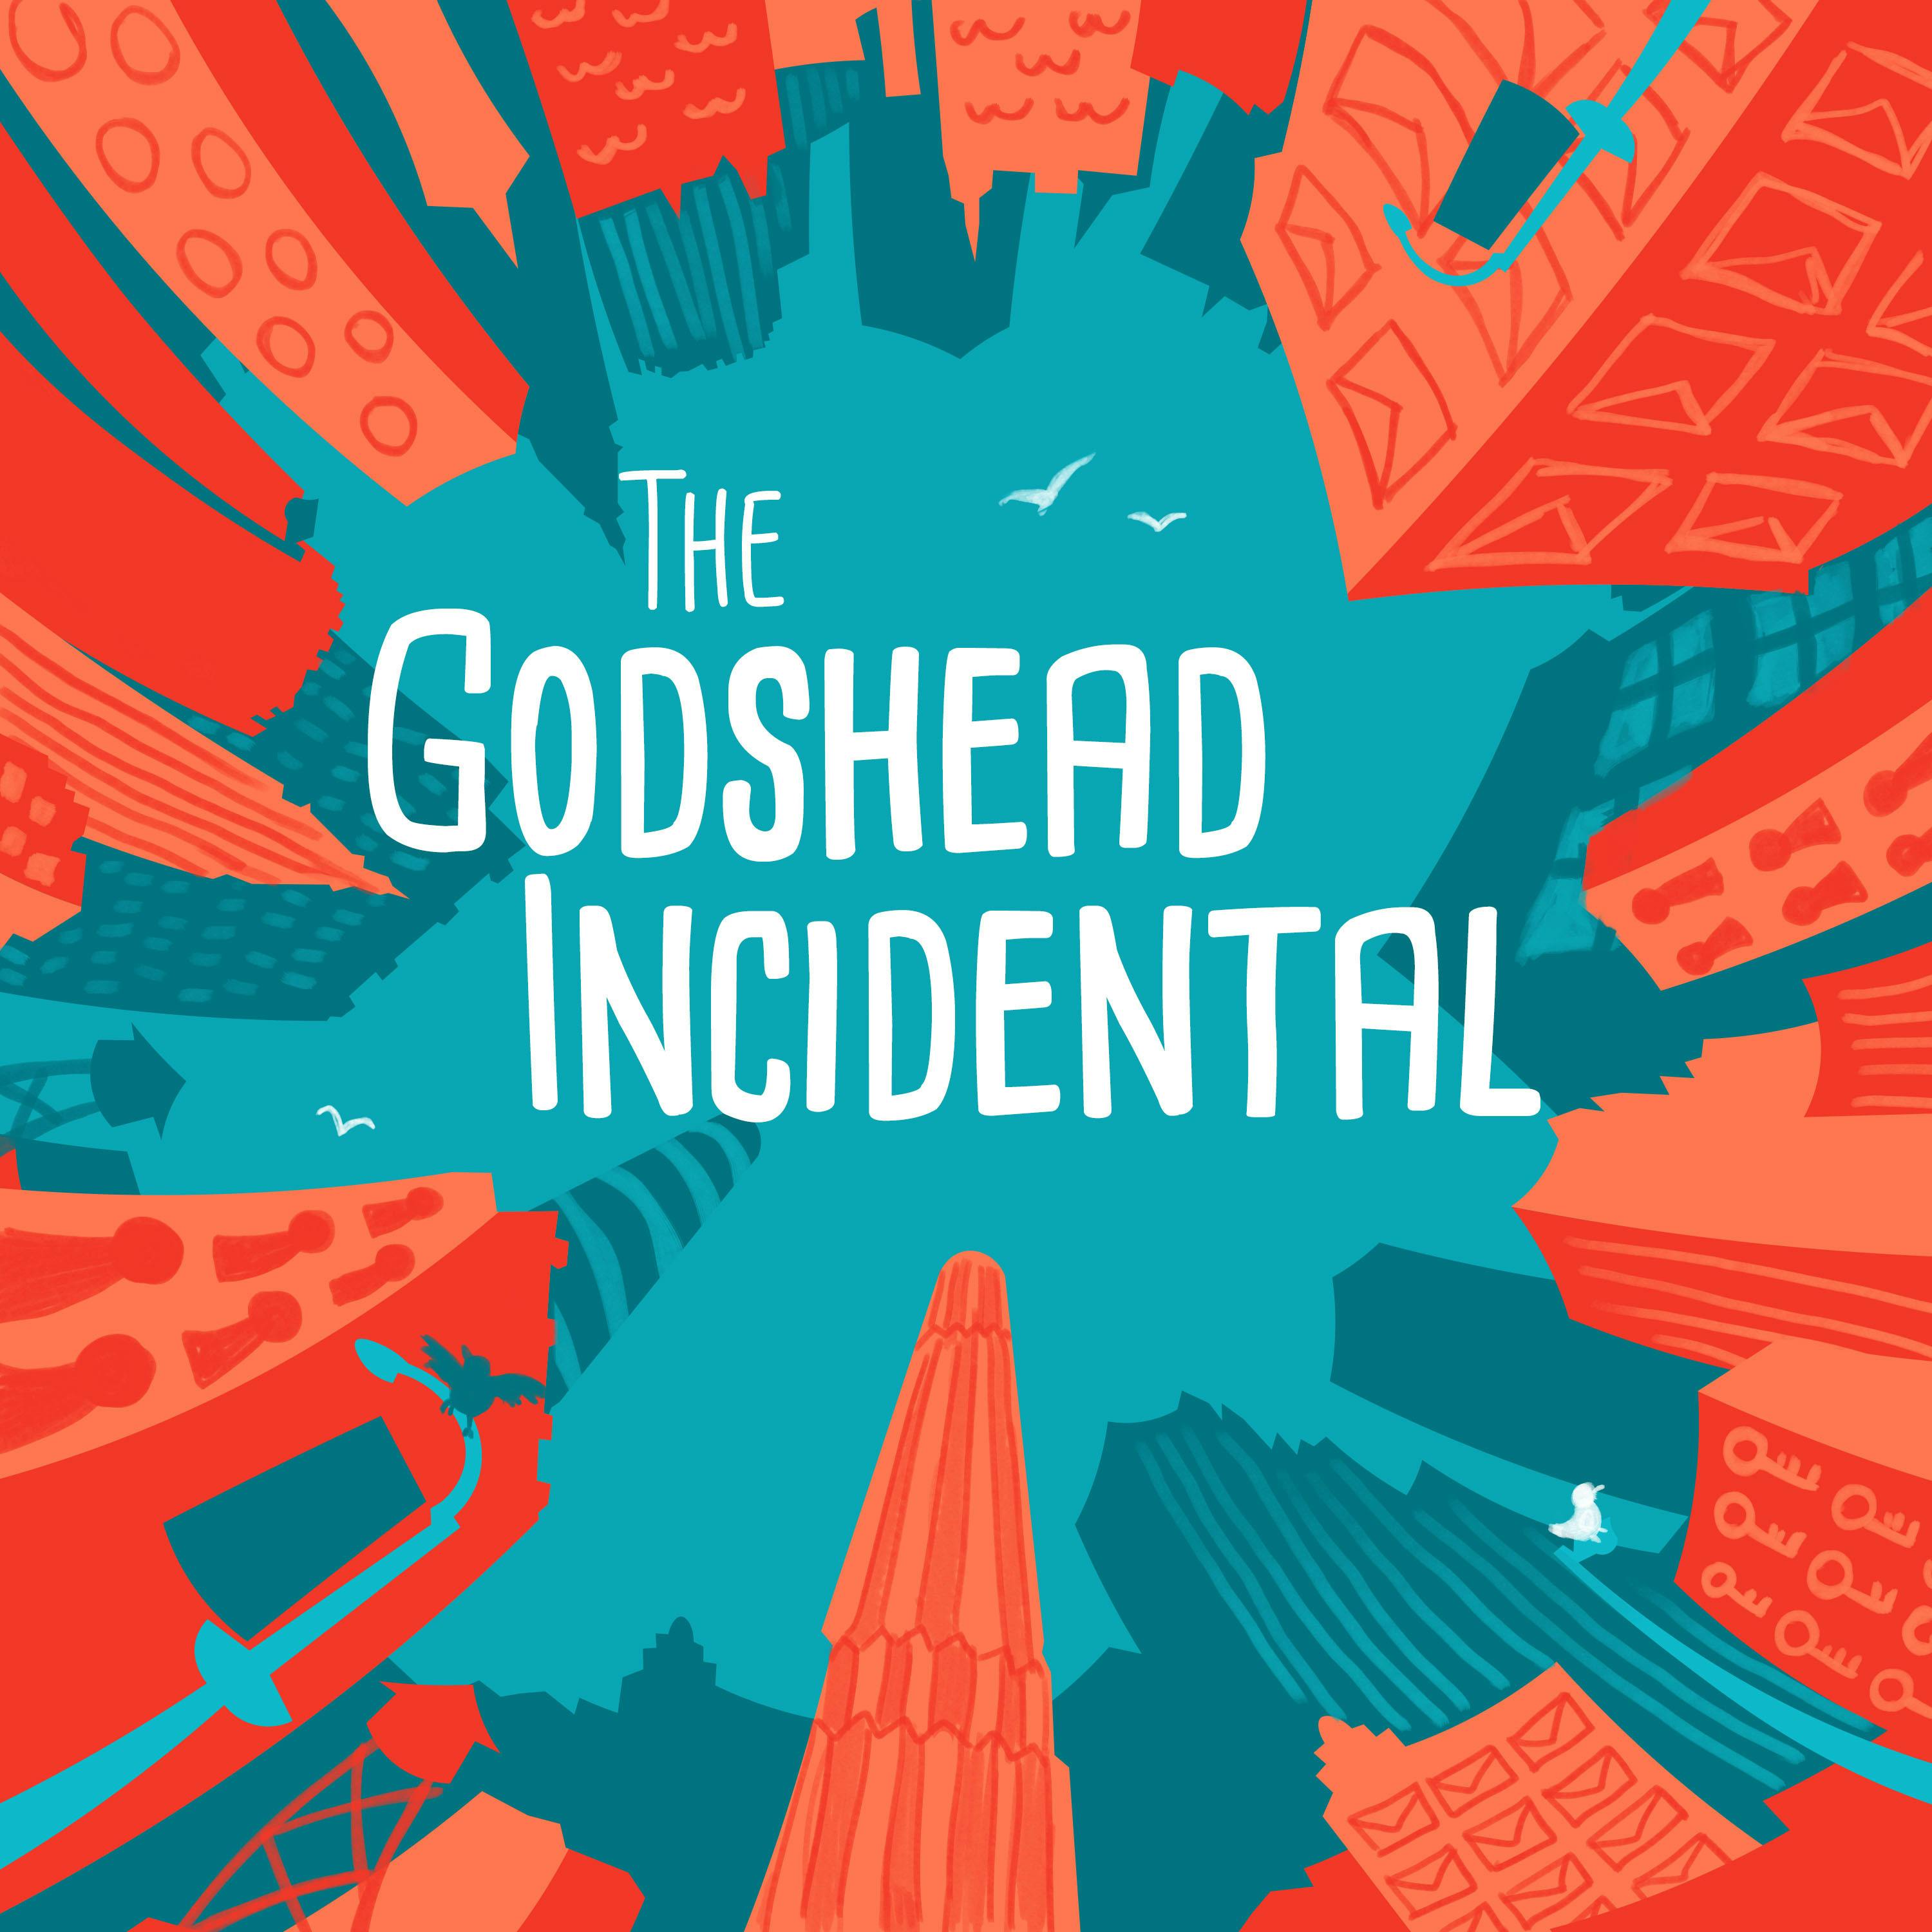 The Godshead Incidental (Creator Showcase- November 16, 2020)